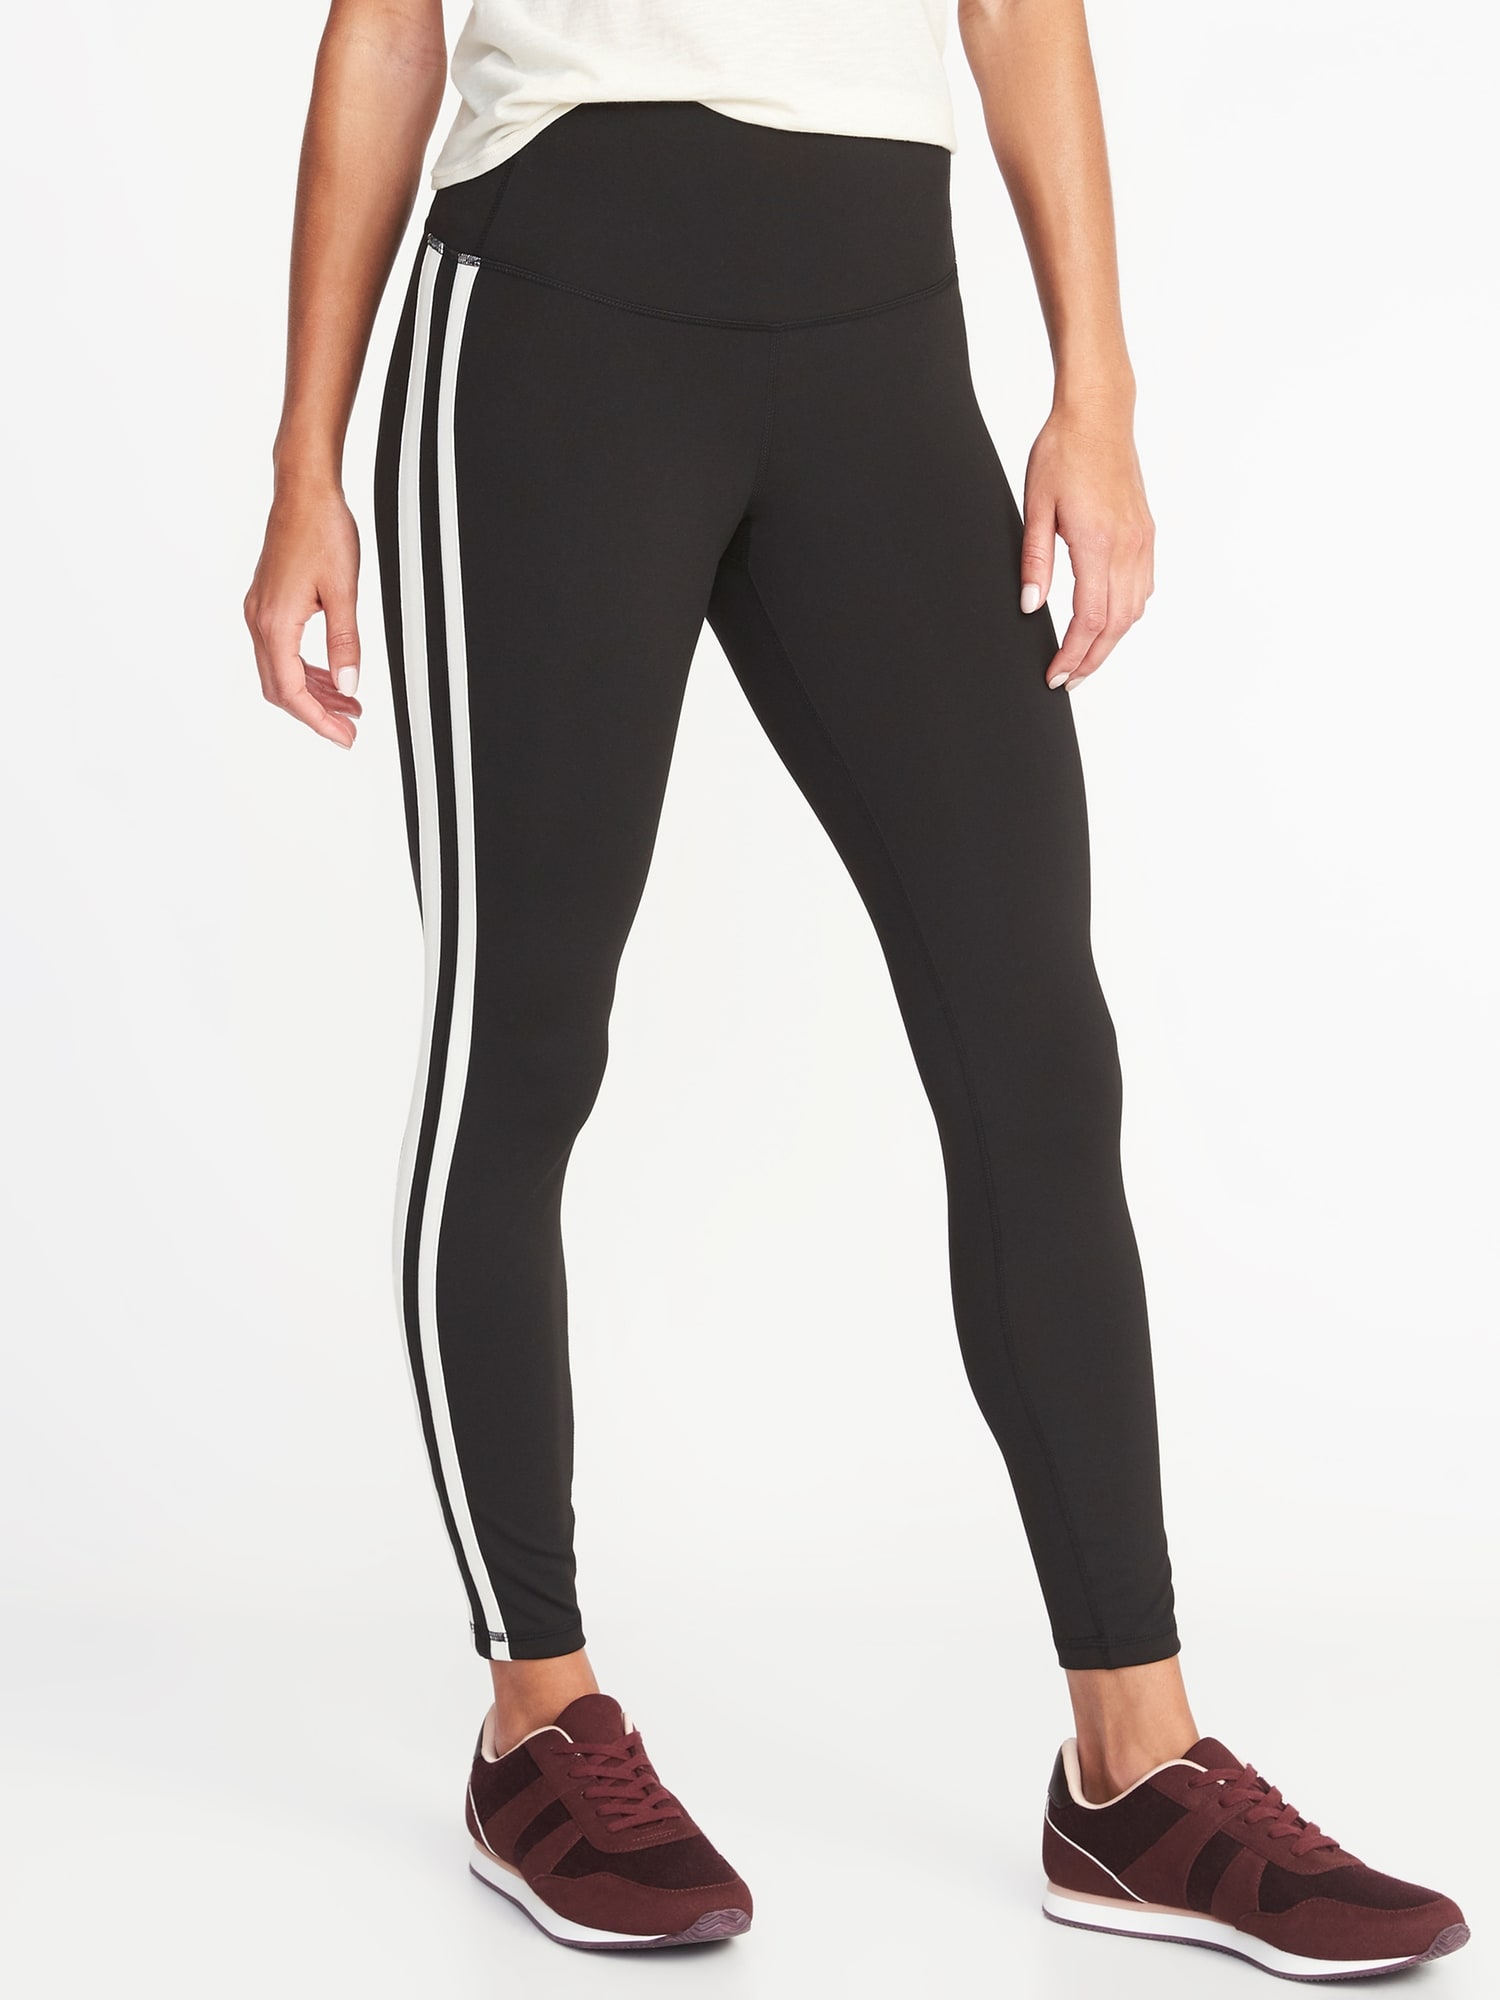 Adidas Women's 3 Stripe 7/8 Tights (Black/White, Size L)